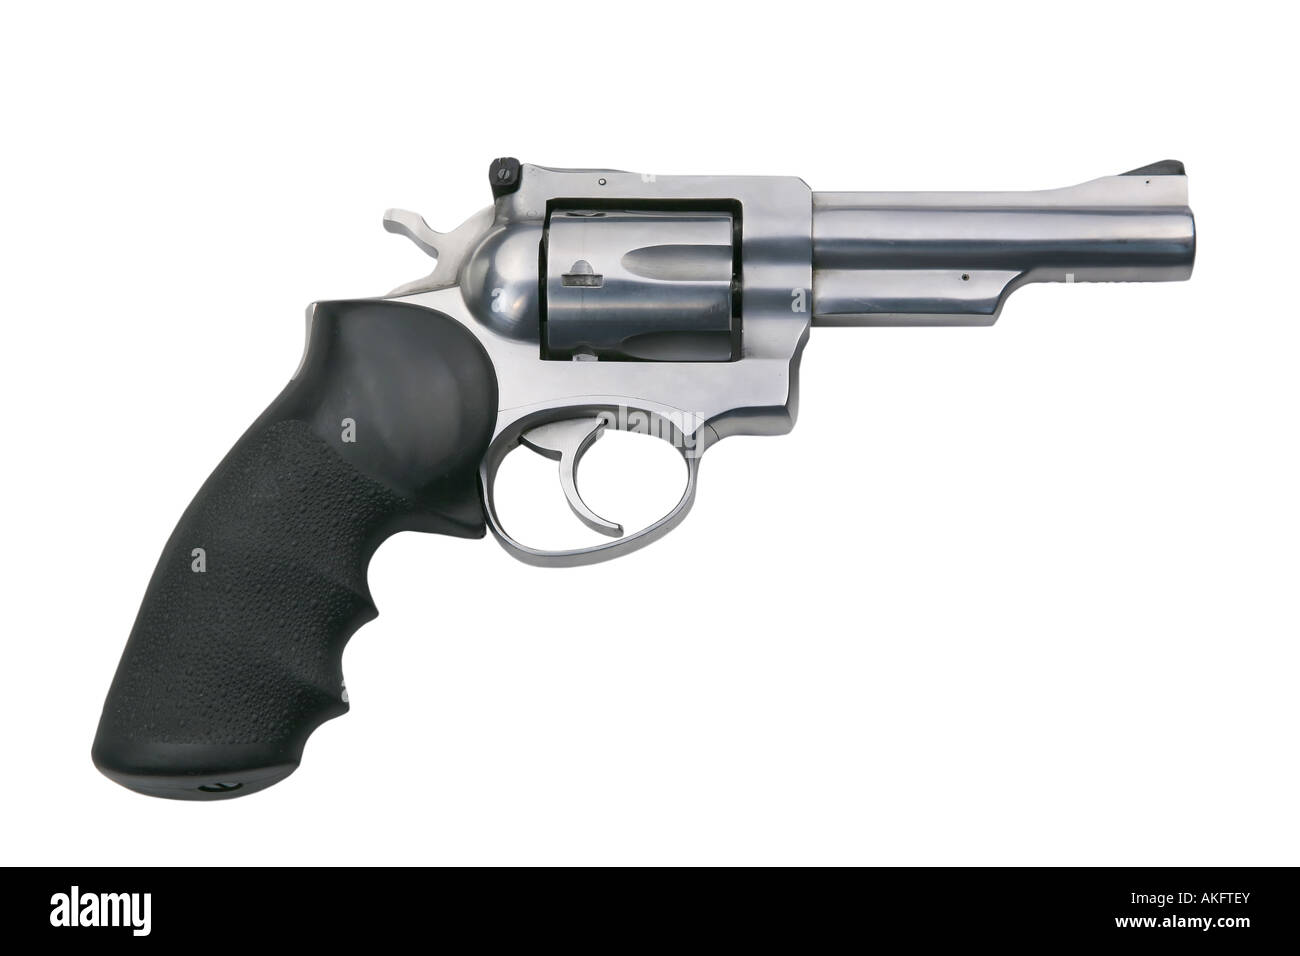 357 caliber hand gun isolated on white background Stock Photo